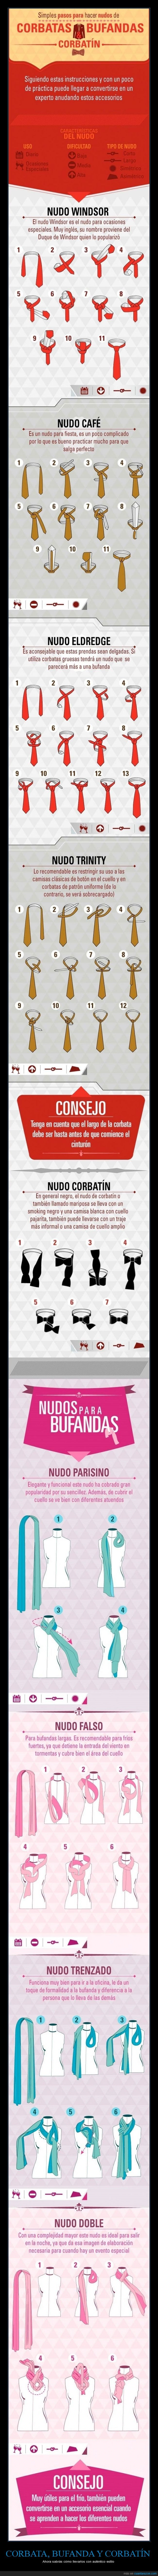 bufanda,corbata,corbatin,instrucciones,lazo,nudo,pajarita